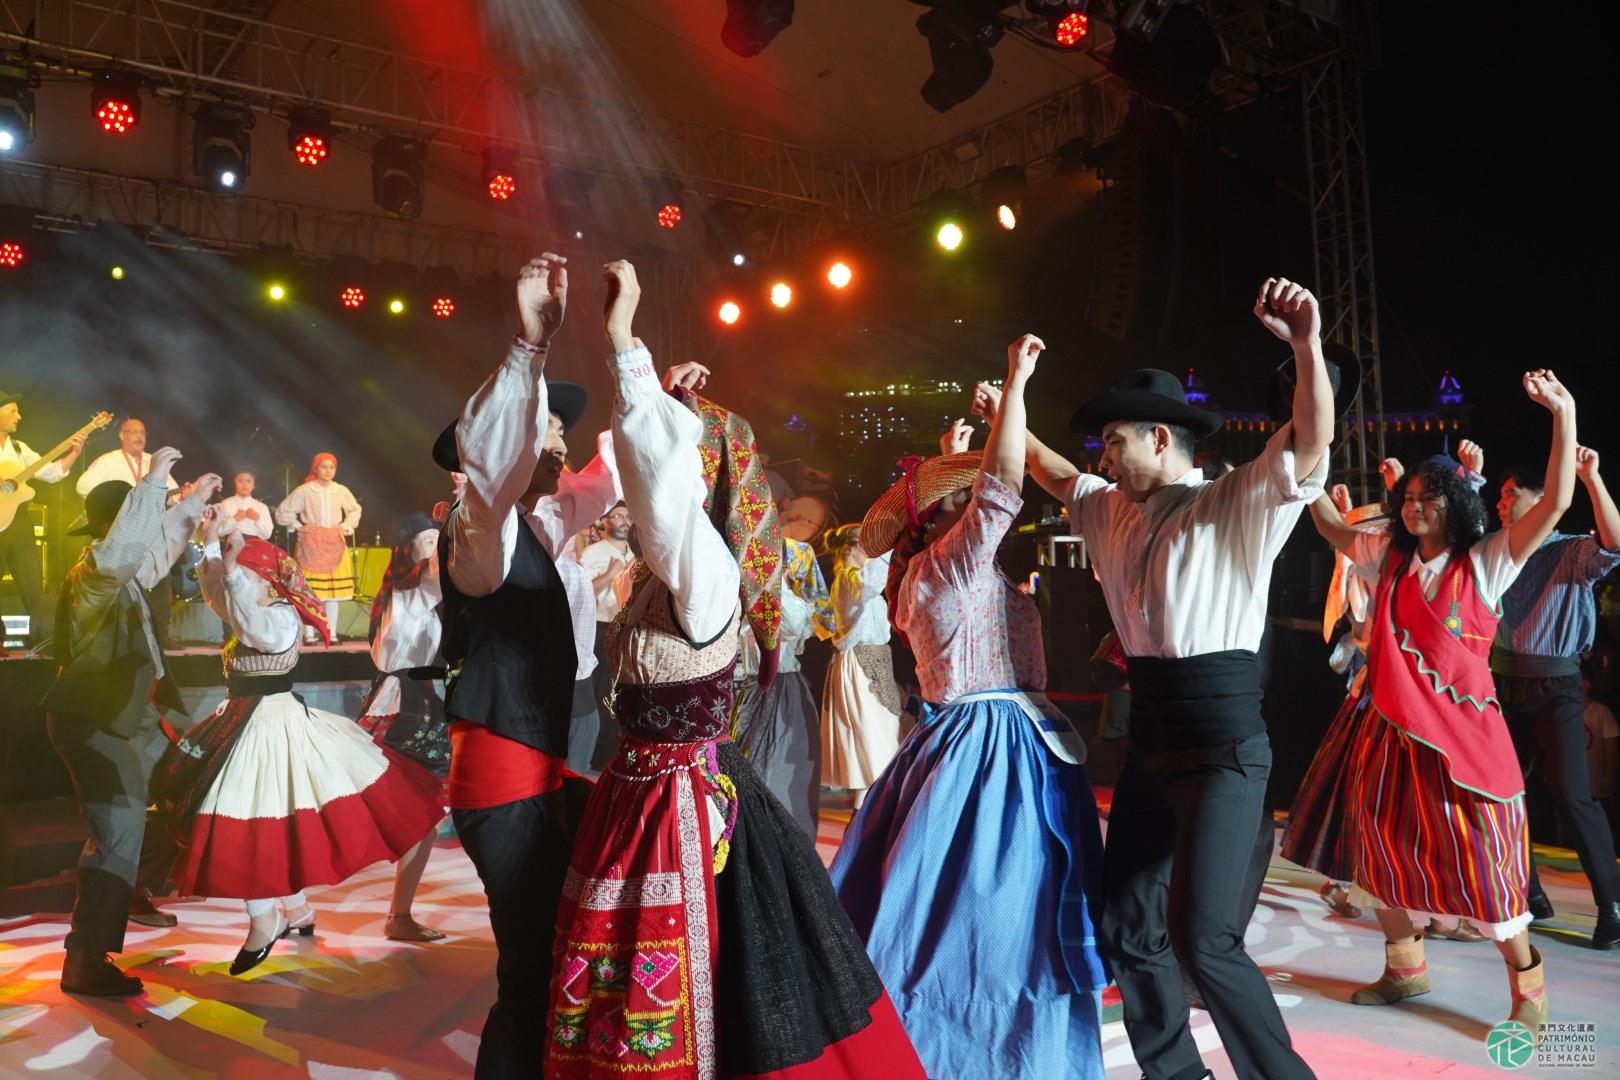 Dança Portuguesa recebe o título de Patrimônio Cultural e